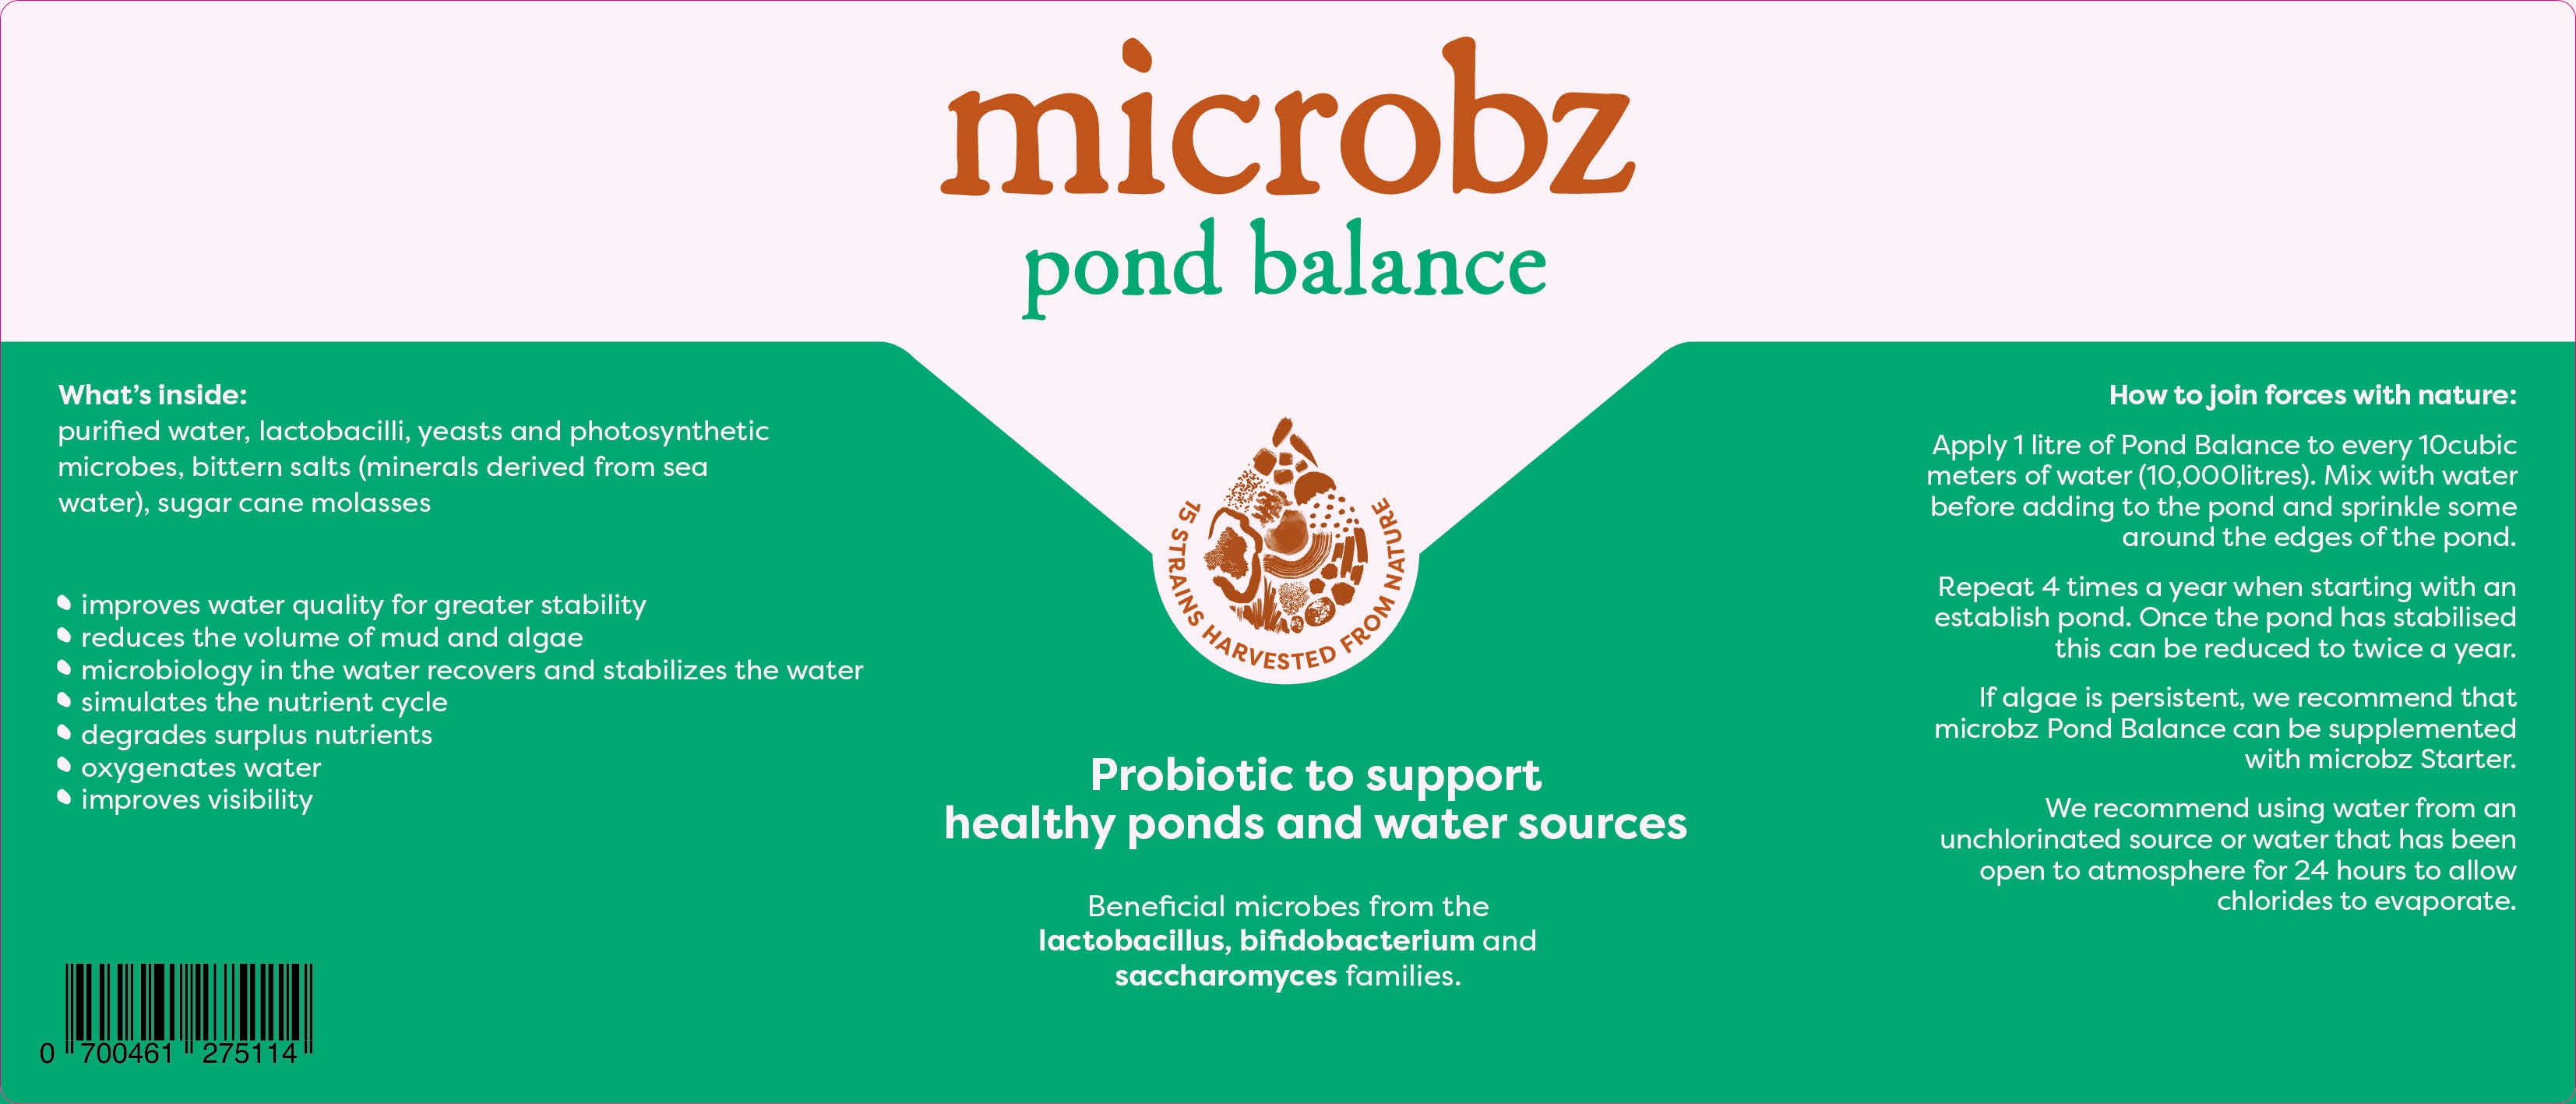 microbz pond balance label